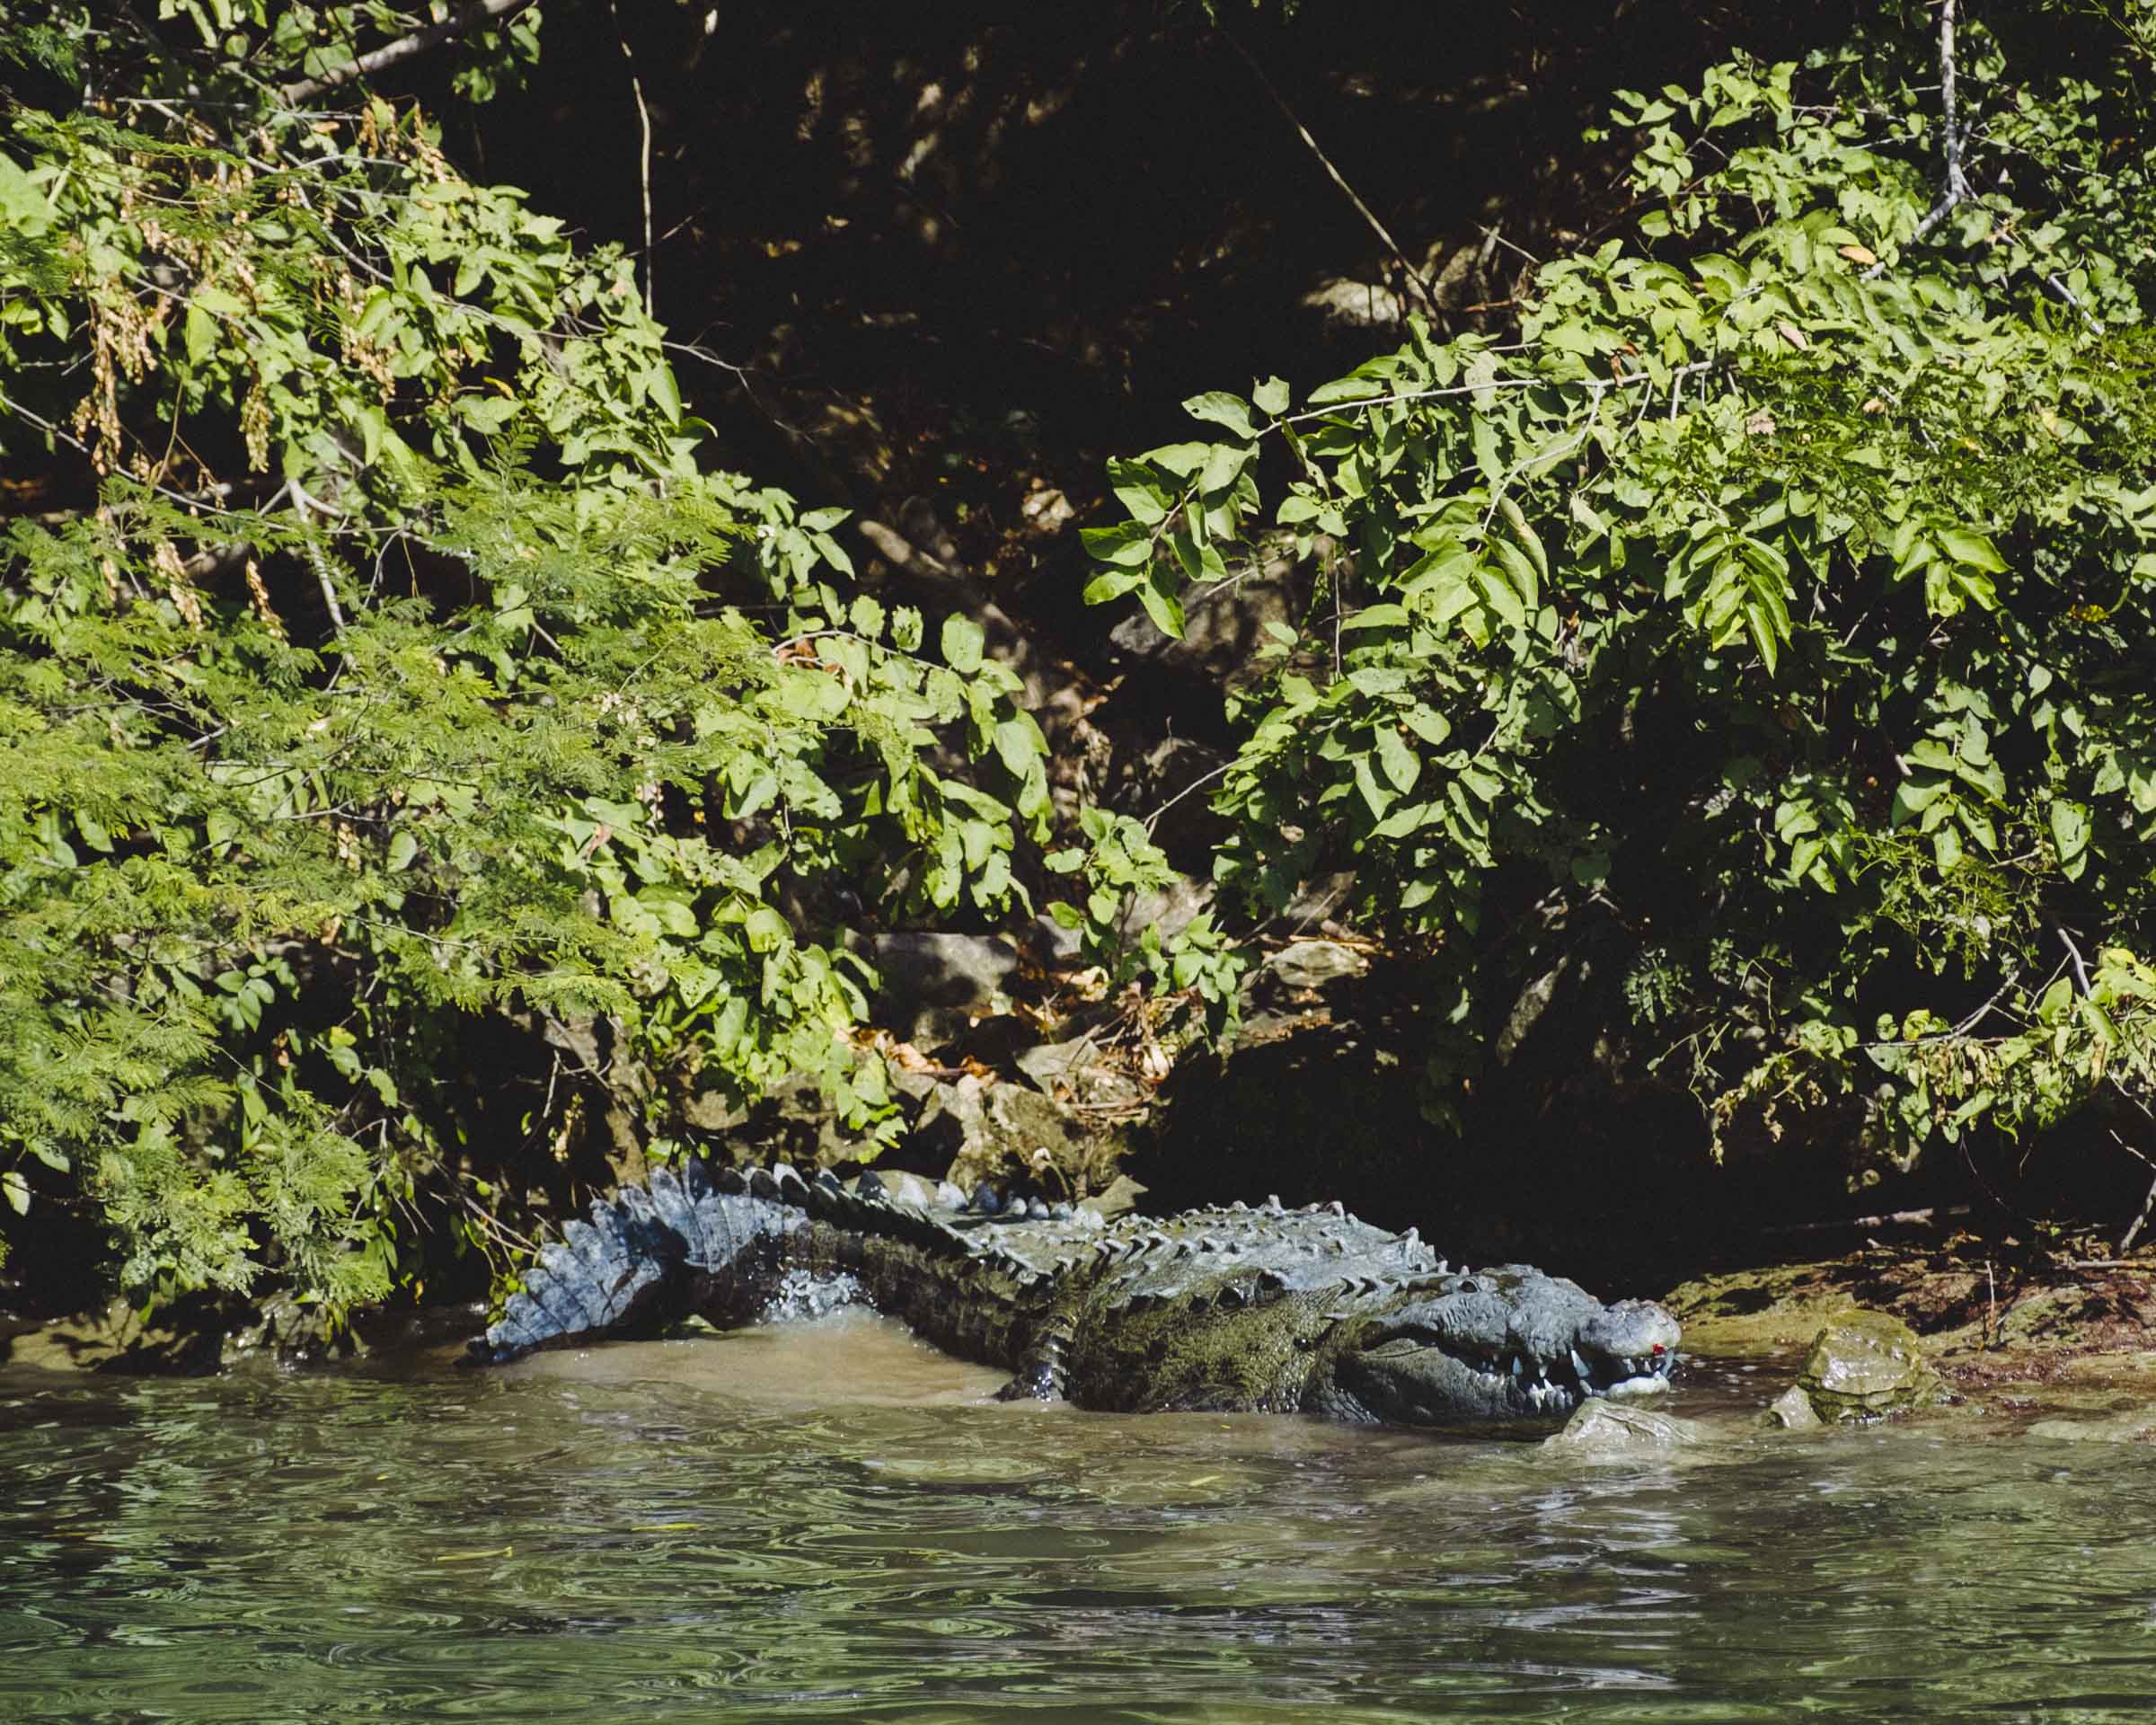 Crocodile on the banks of the Sumidero Canyon